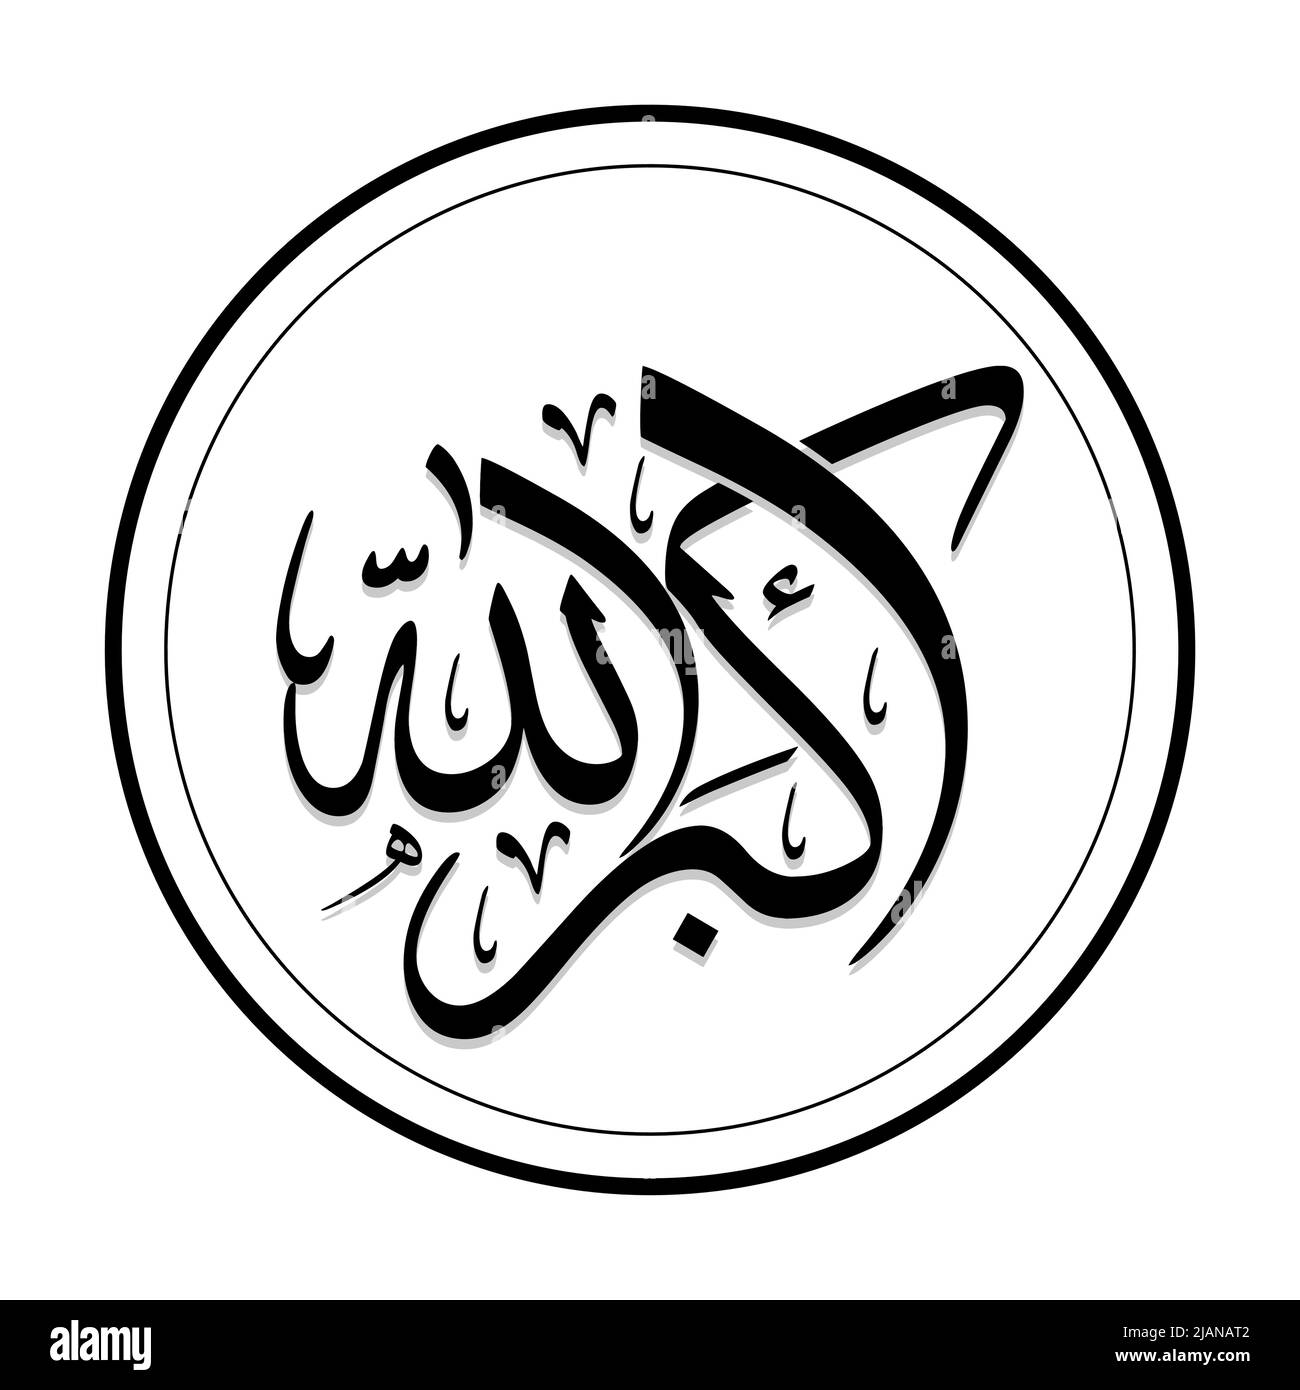 Allah is the greatest arabic calligraphy vector design. Stock Vector